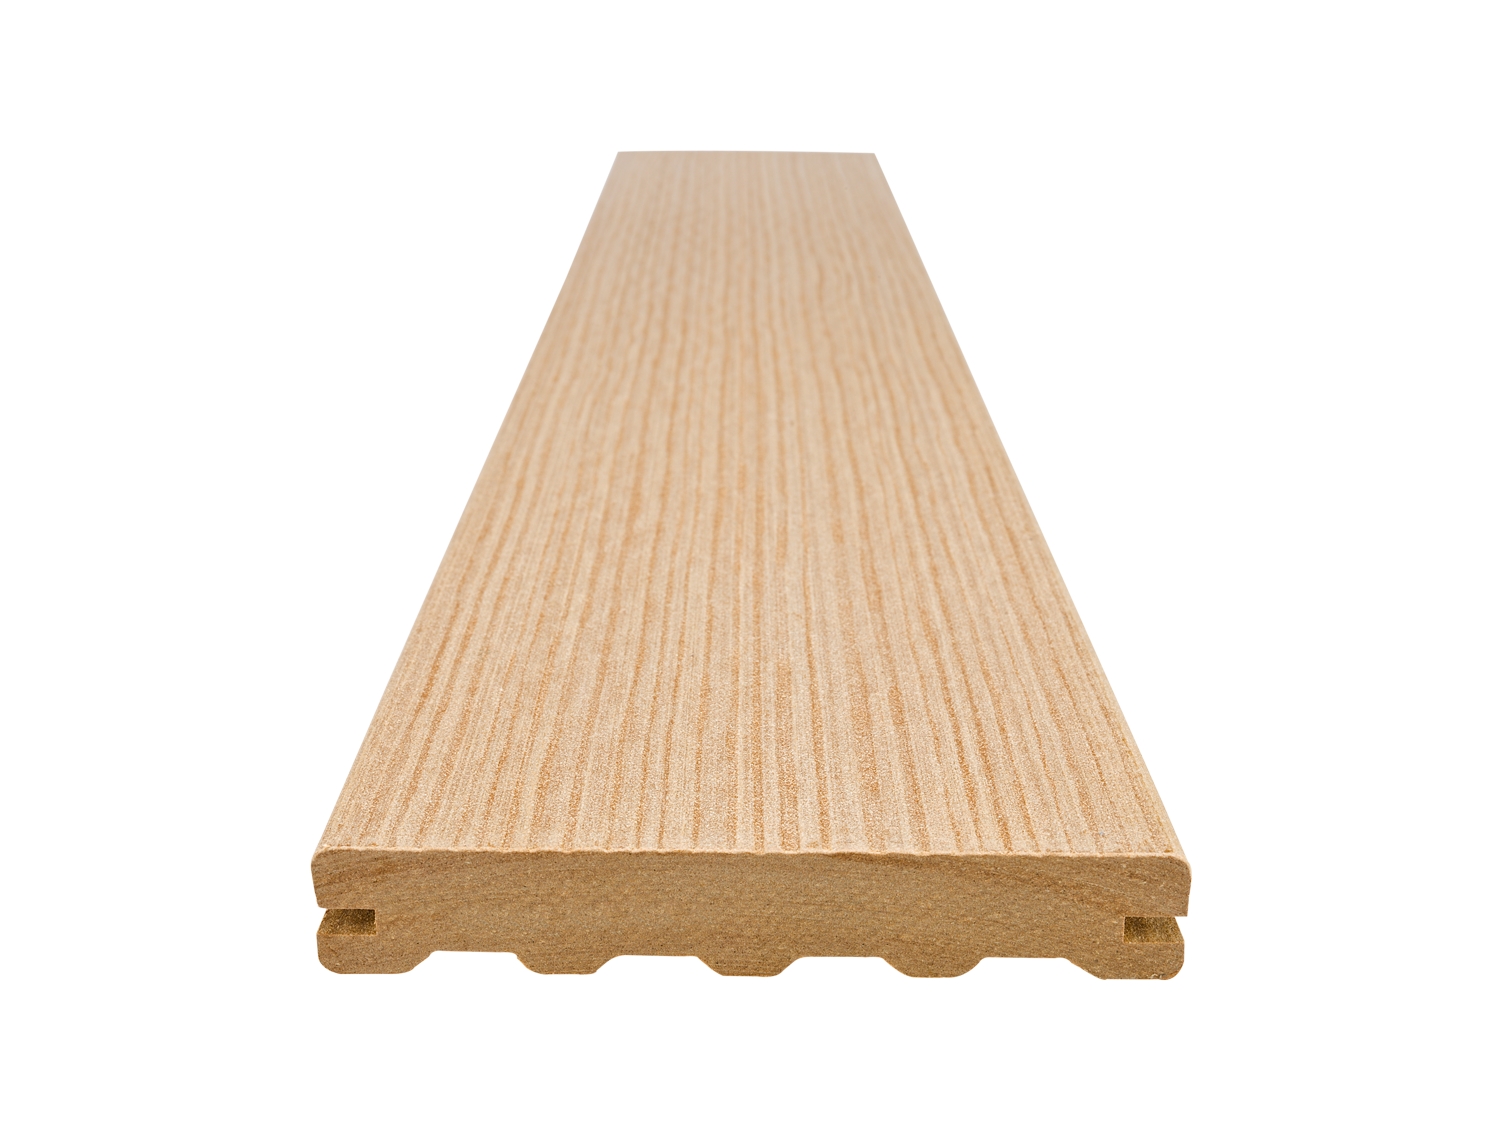 Prkno terasové Woodplastic FOREST PREMIUM cedar 22×137×4000 mm